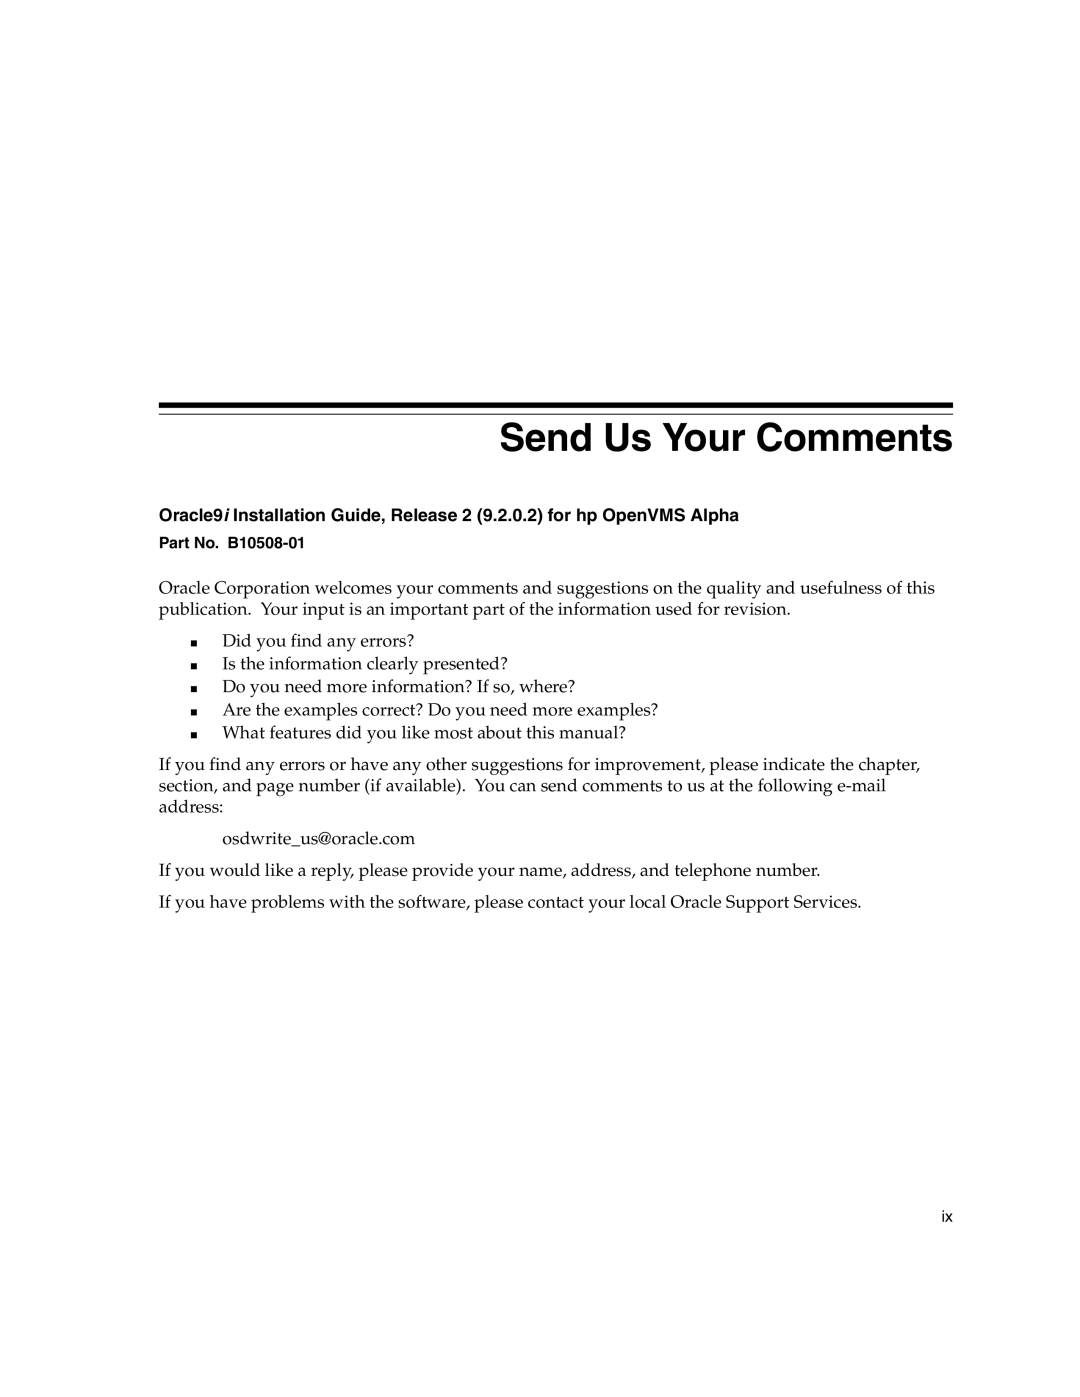 Oracle Audio Technologies manual Send Us Your Comments, Part No. B10508-01 